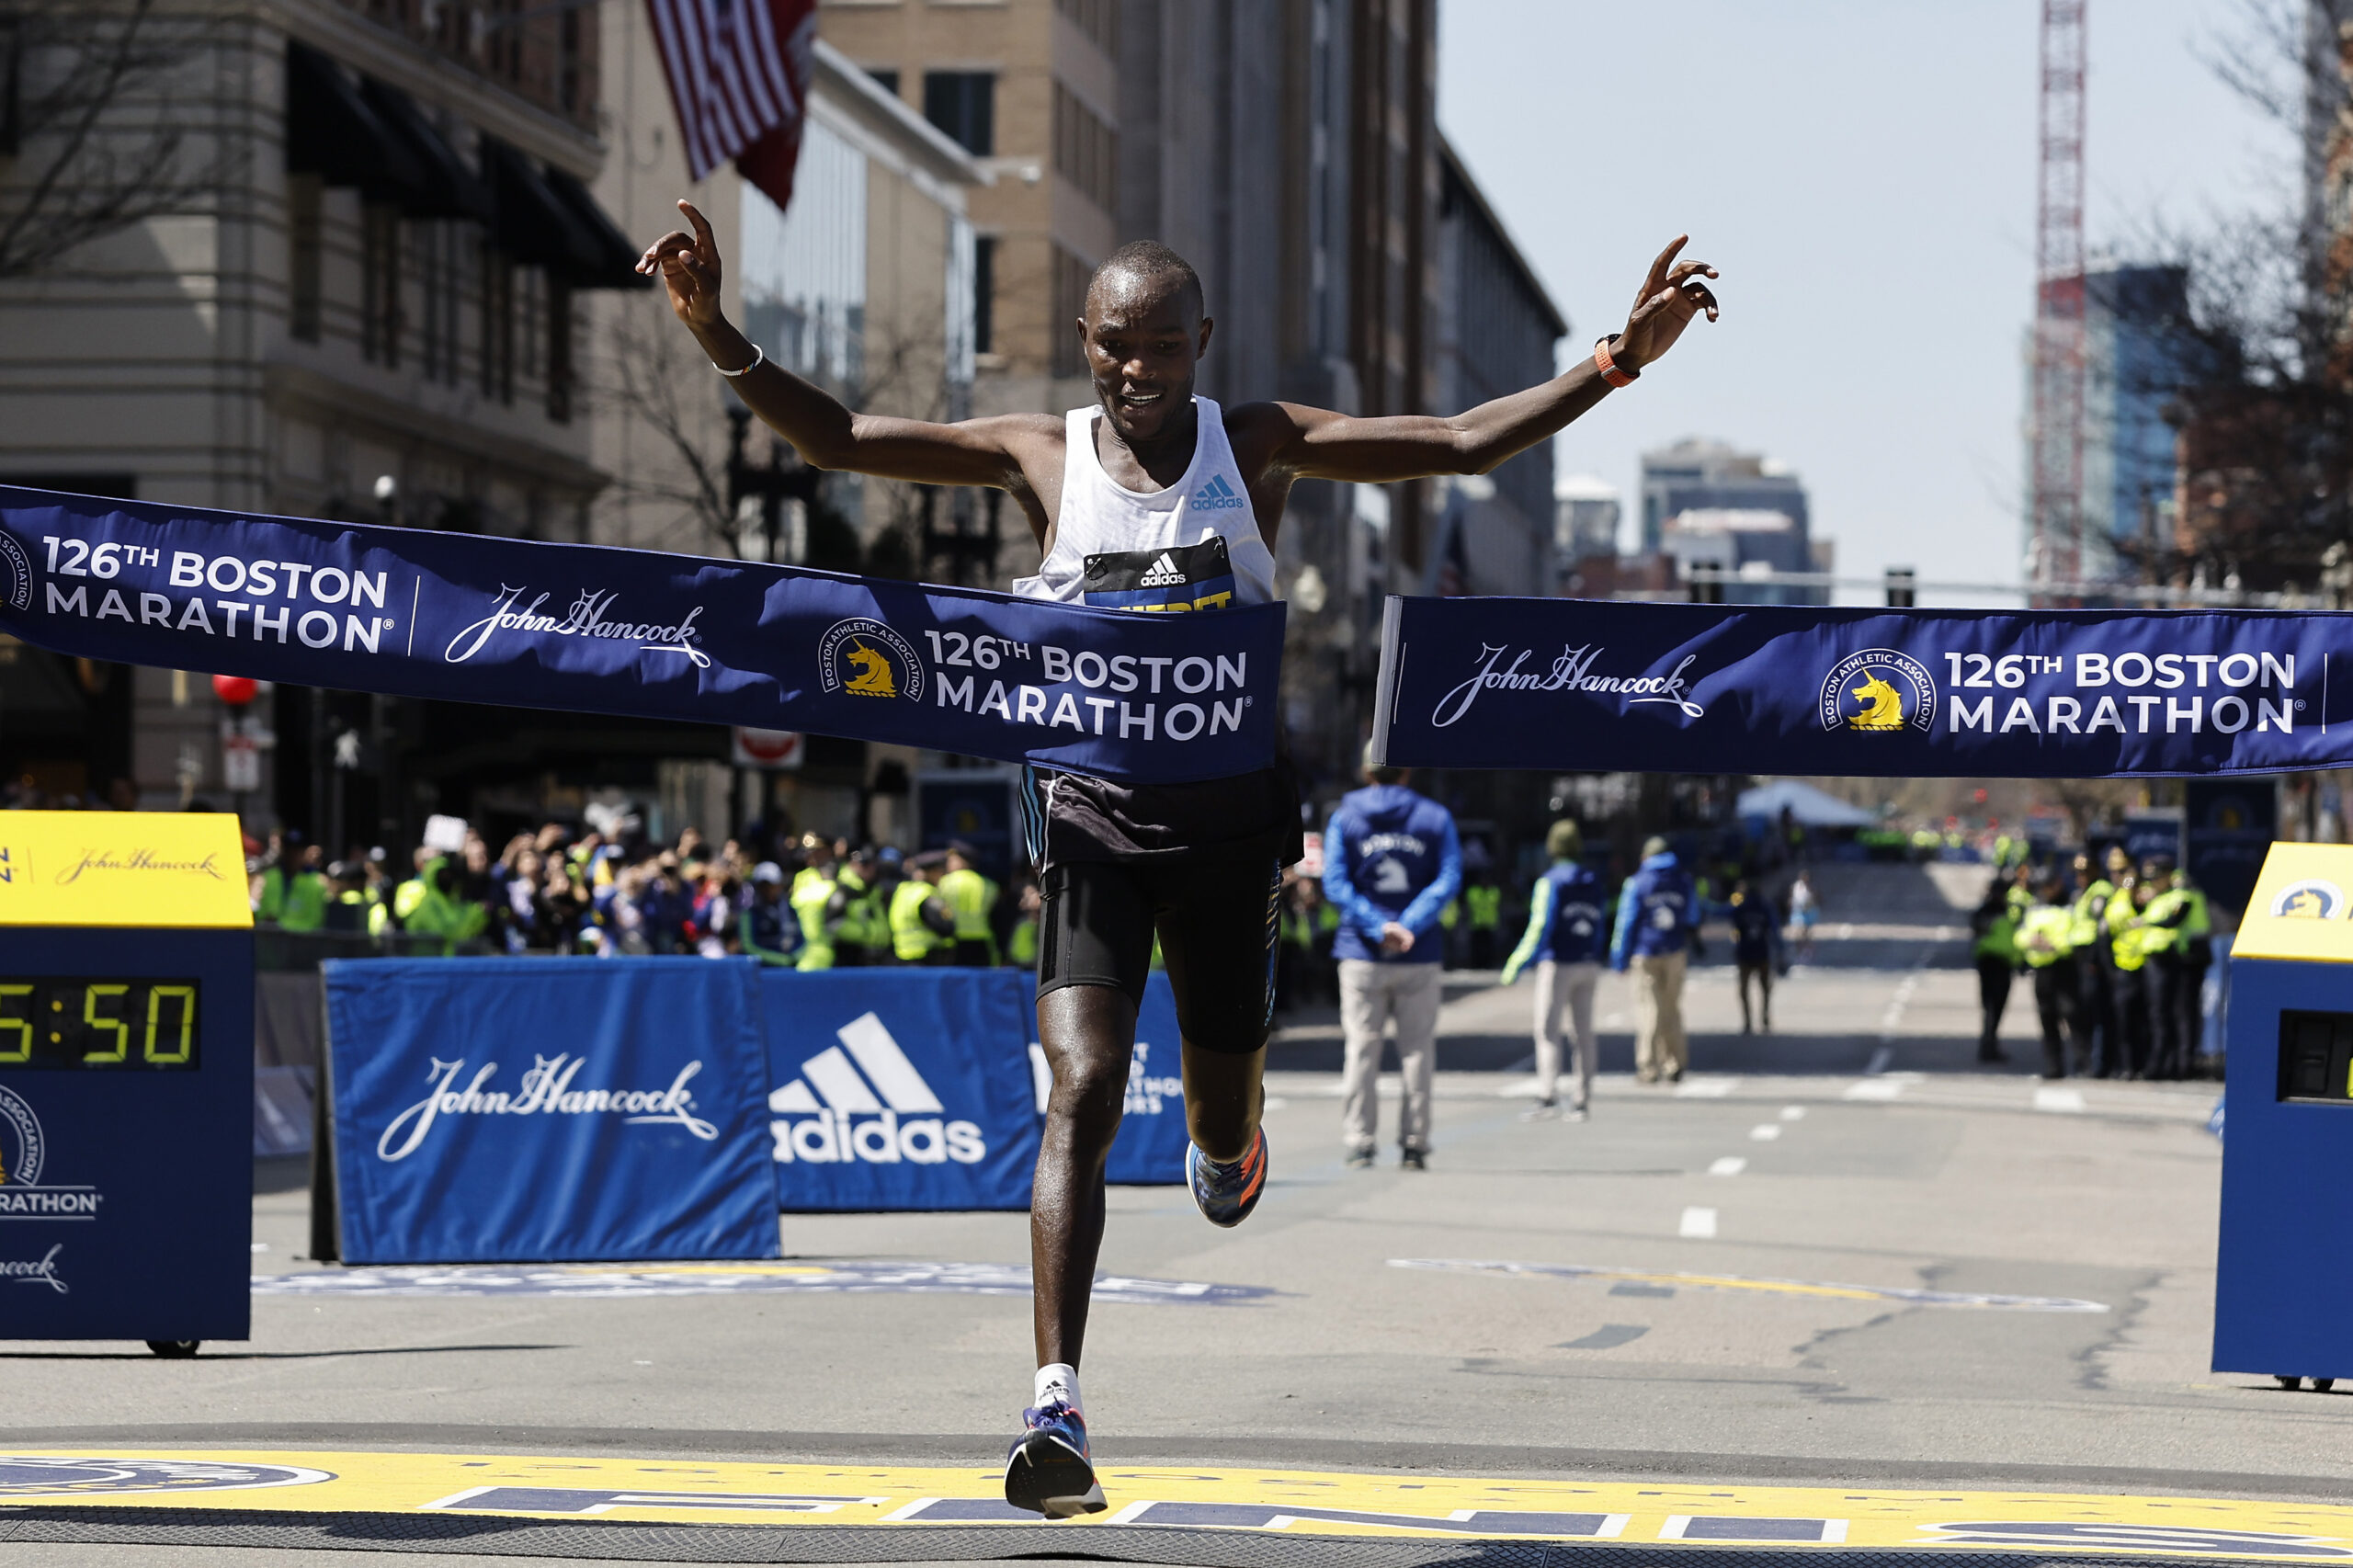 Evans Chebet, of Kenya, hits the tape to win the 126th Boston Marathon, Monday, April 18, 2022, in Boston. (AP Photo/Winslow Townson)